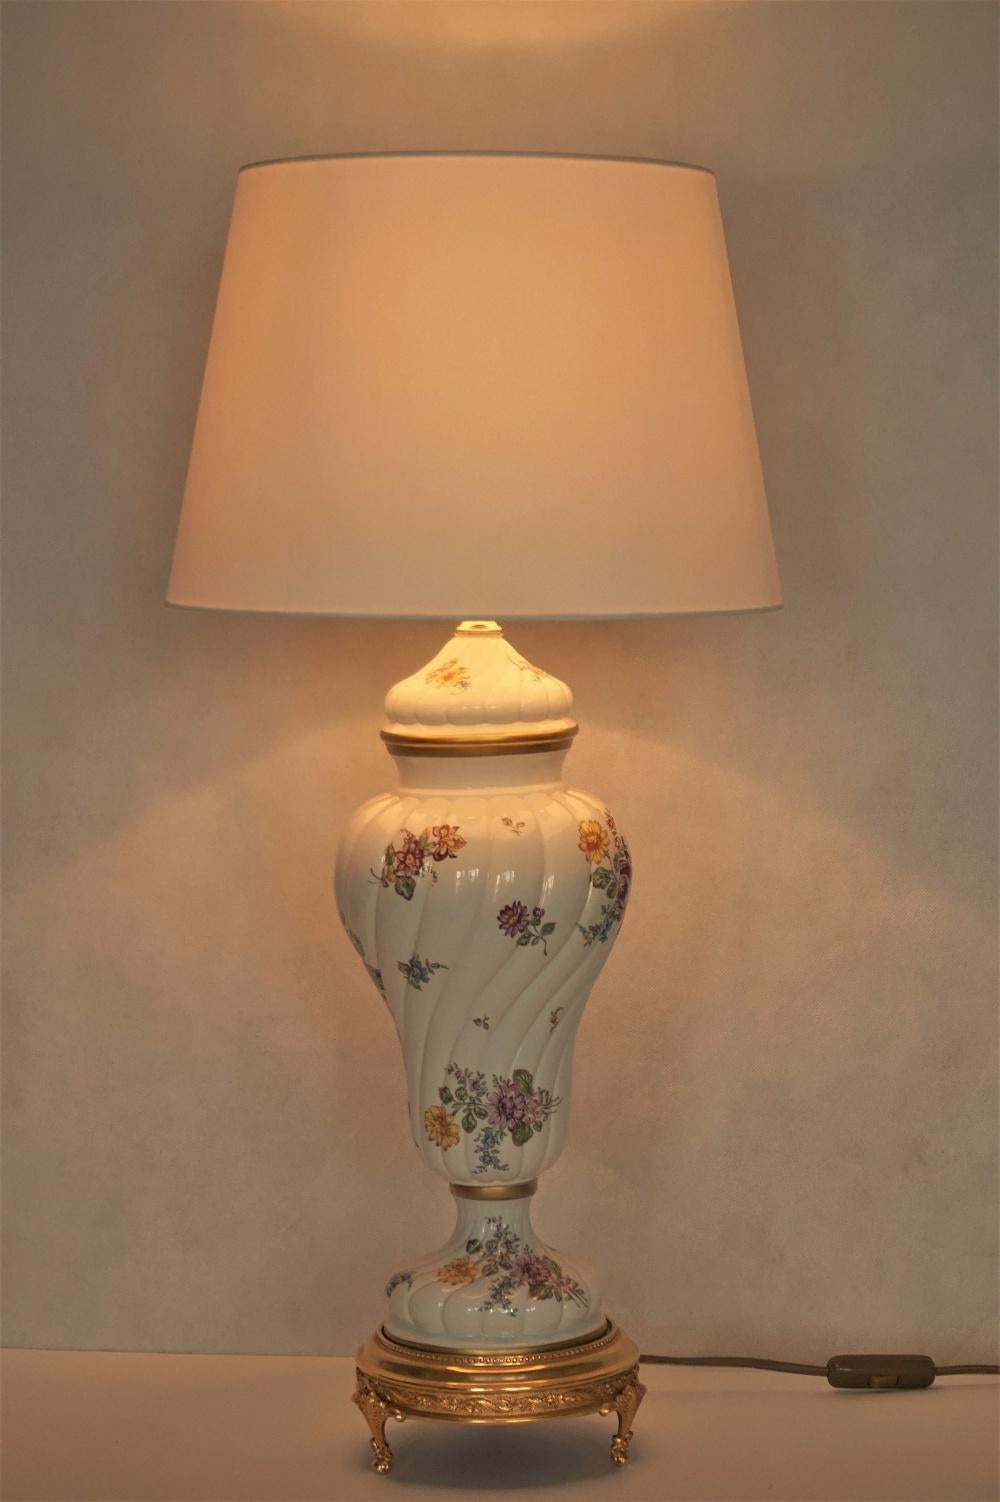 Franklin Mint vase table lamp 